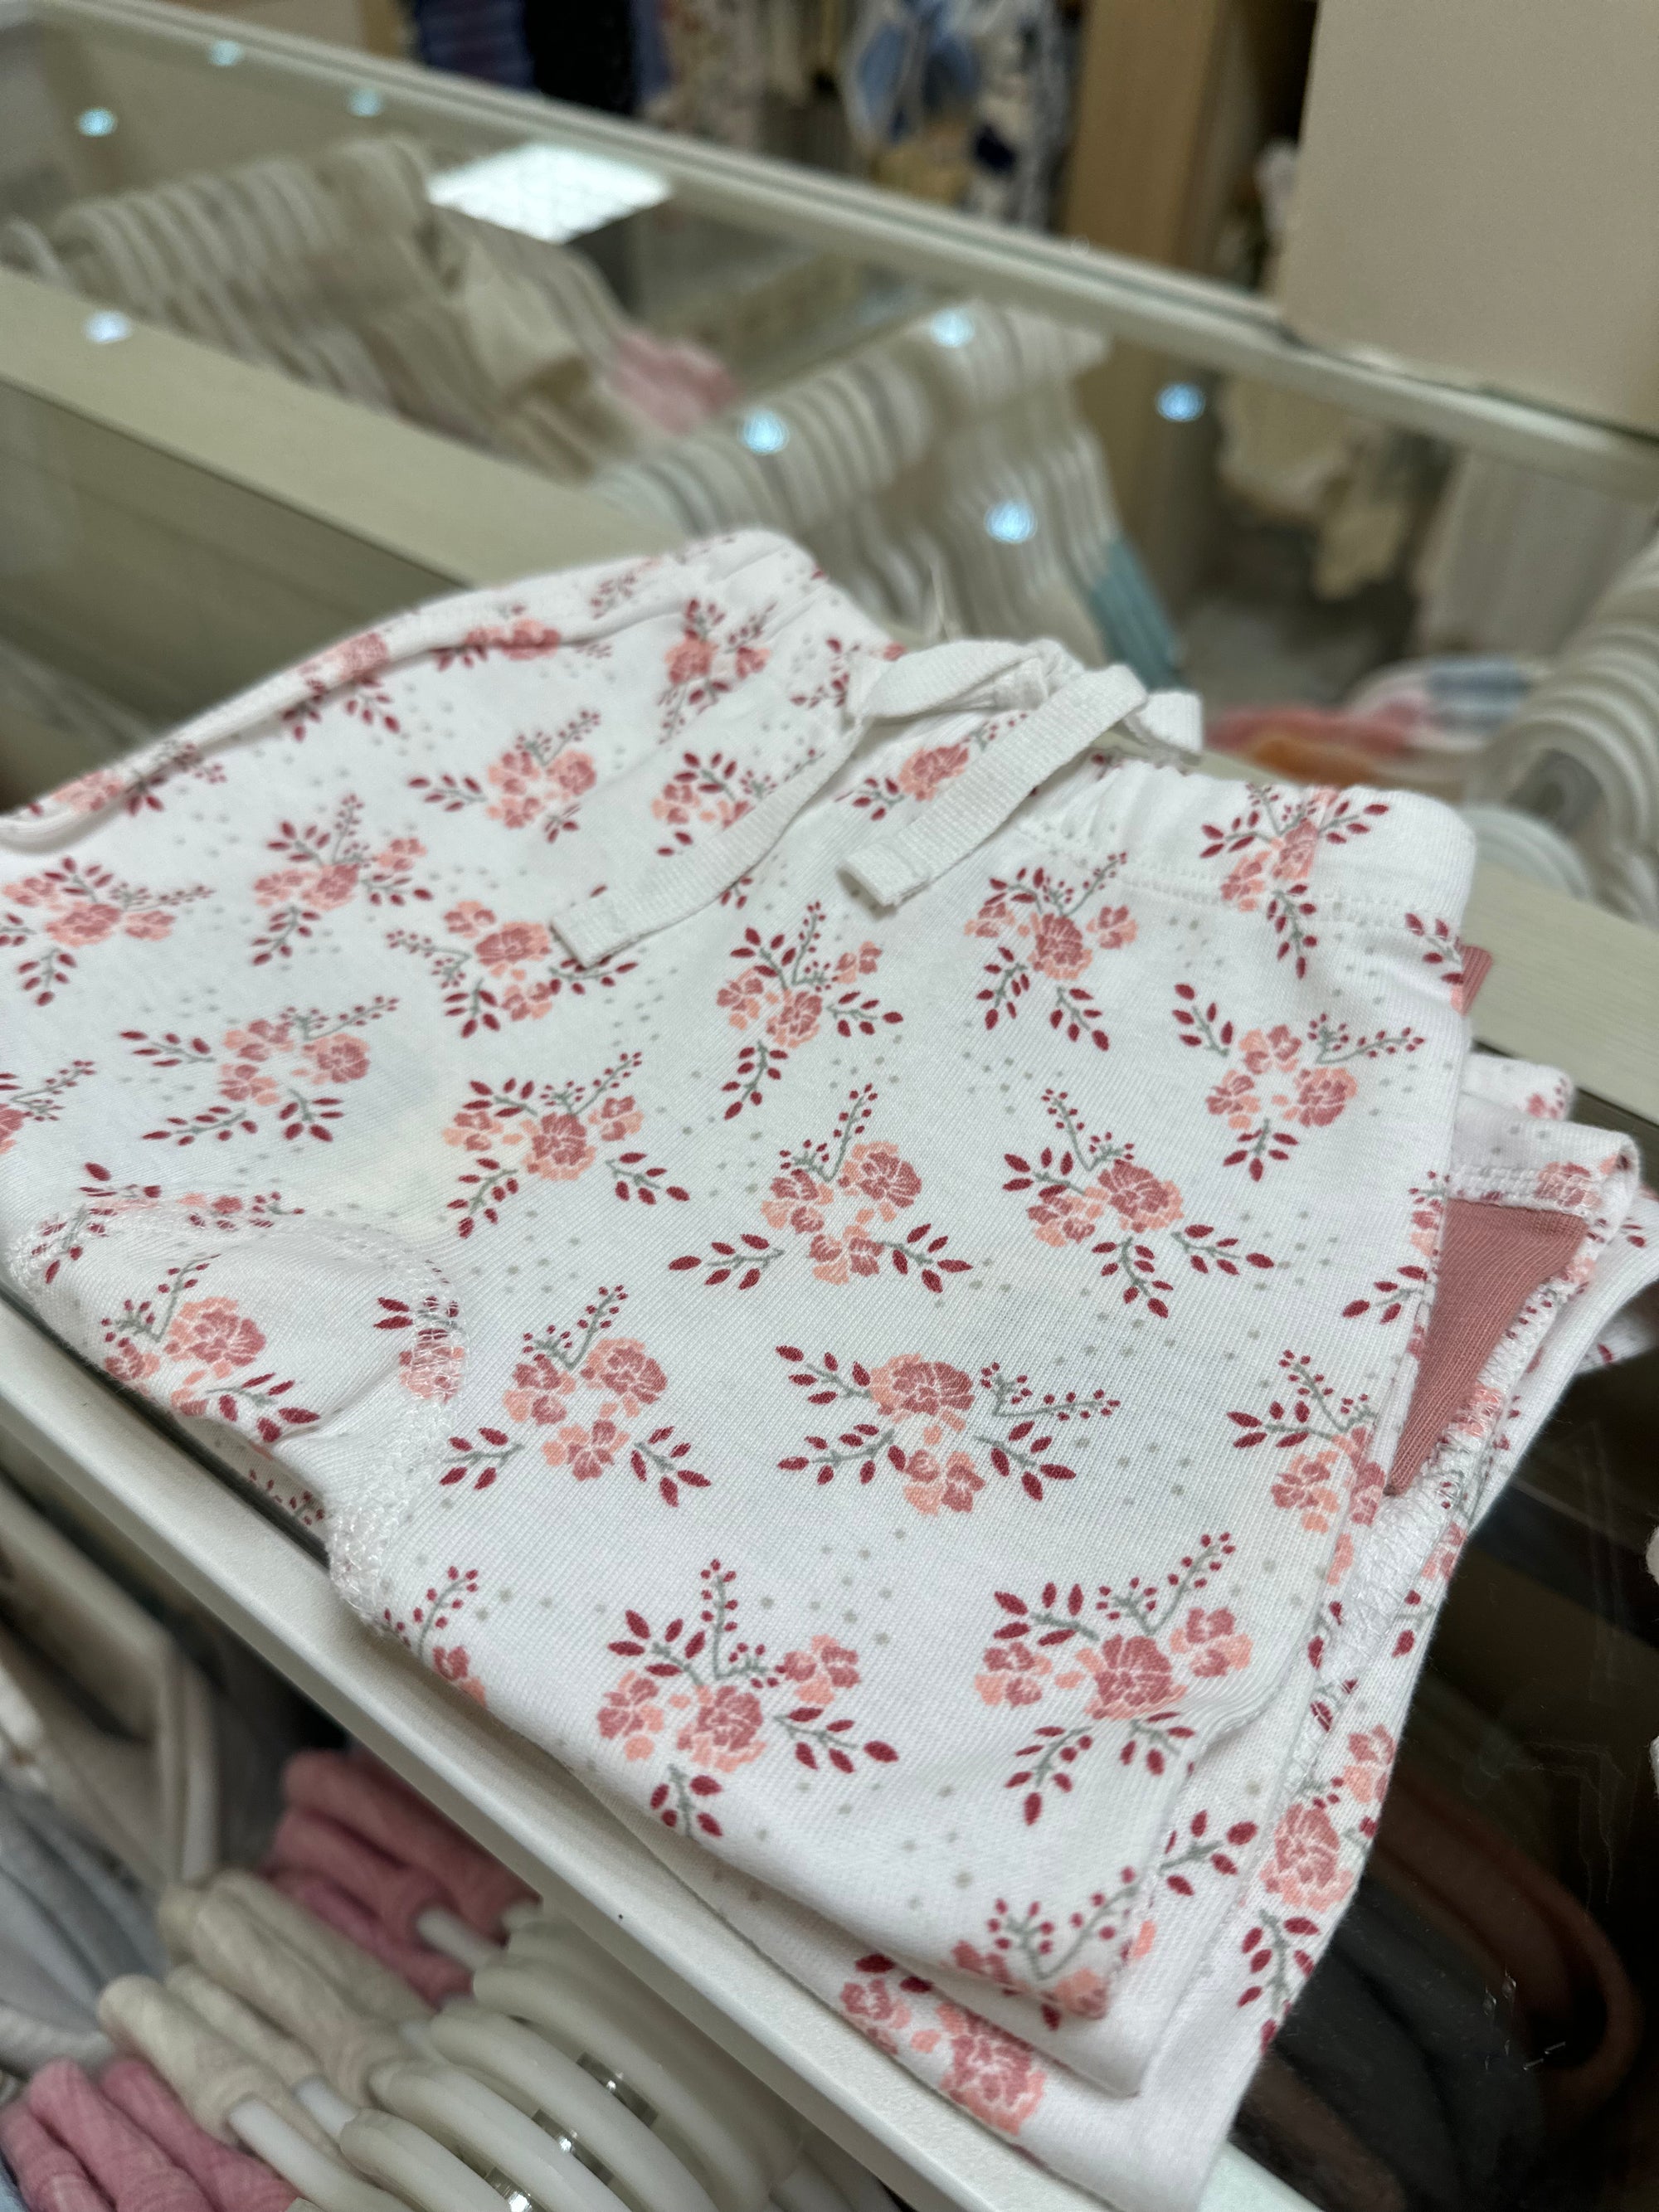 sapling organic cotton clothes for baby bramble pink pants